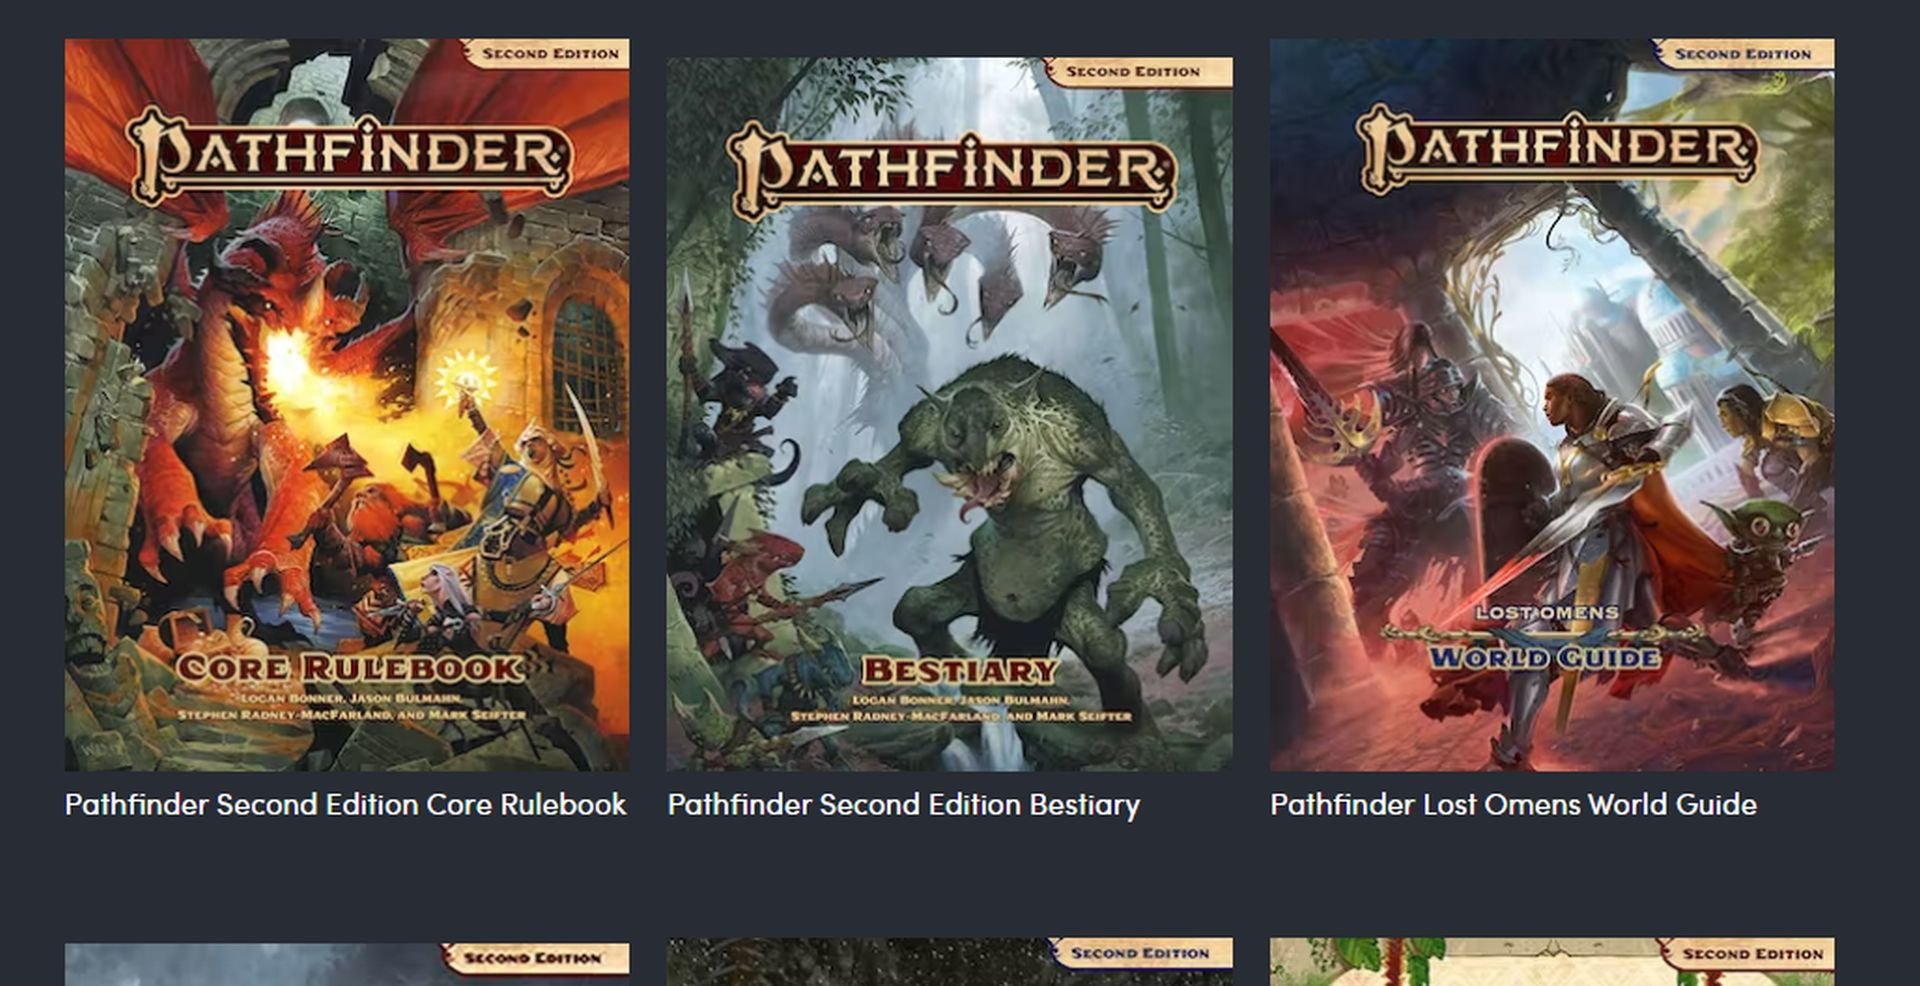 Tenkar's Tavern: Humble RPG Book Bundle: Pathfinder Lost Omens Lore Archive  by Paizo.